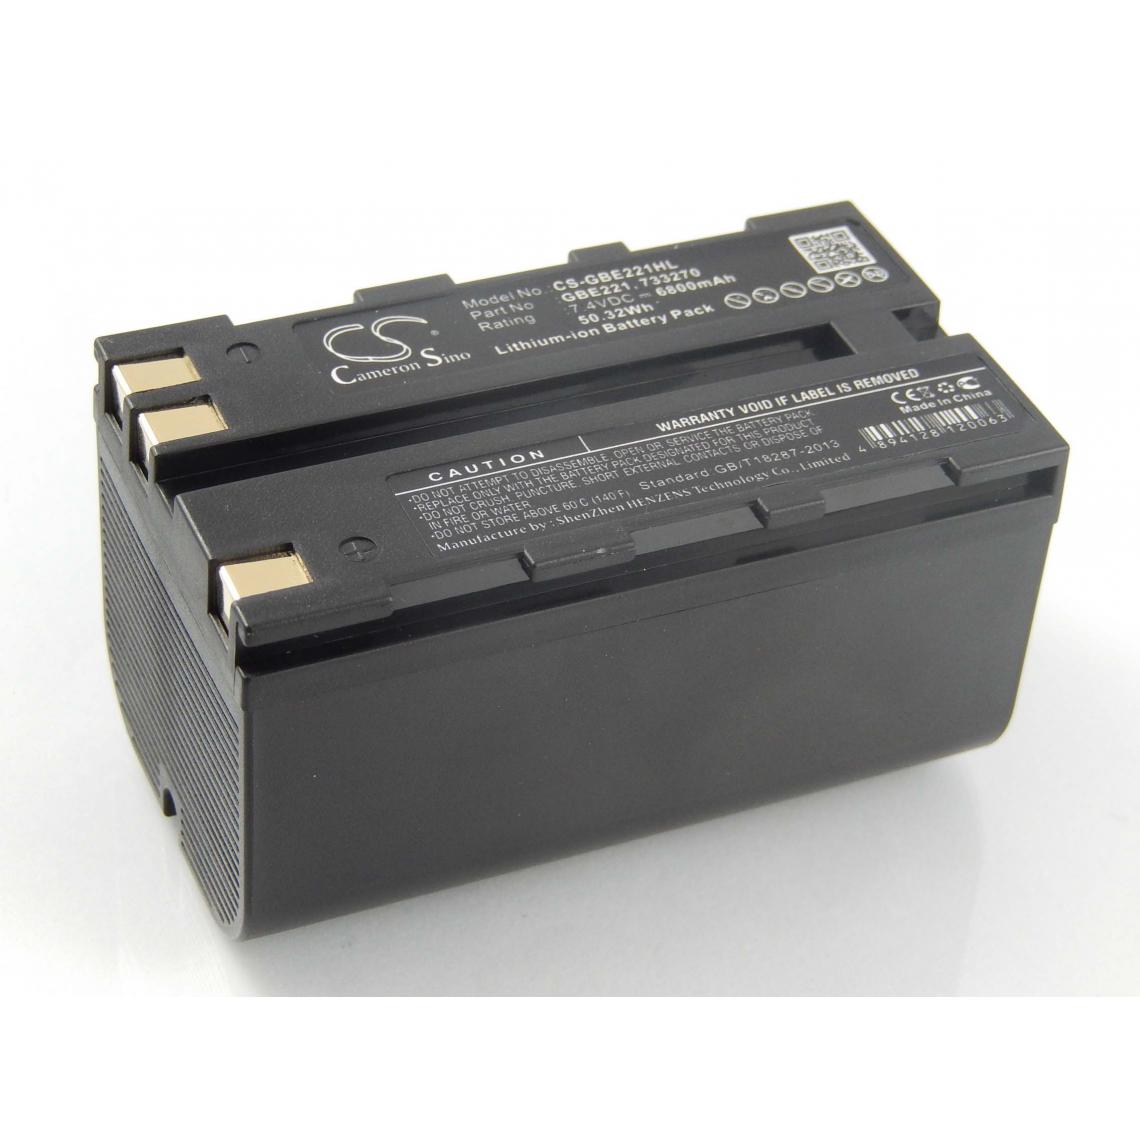 Vhbw - vhbw Batterie compatible avec Leica TC402, TC403, TC405, TC406 dispositif de mesure laser, outil de mesure (6800mAh, 7,4V, Li-ion) - Piles rechargeables